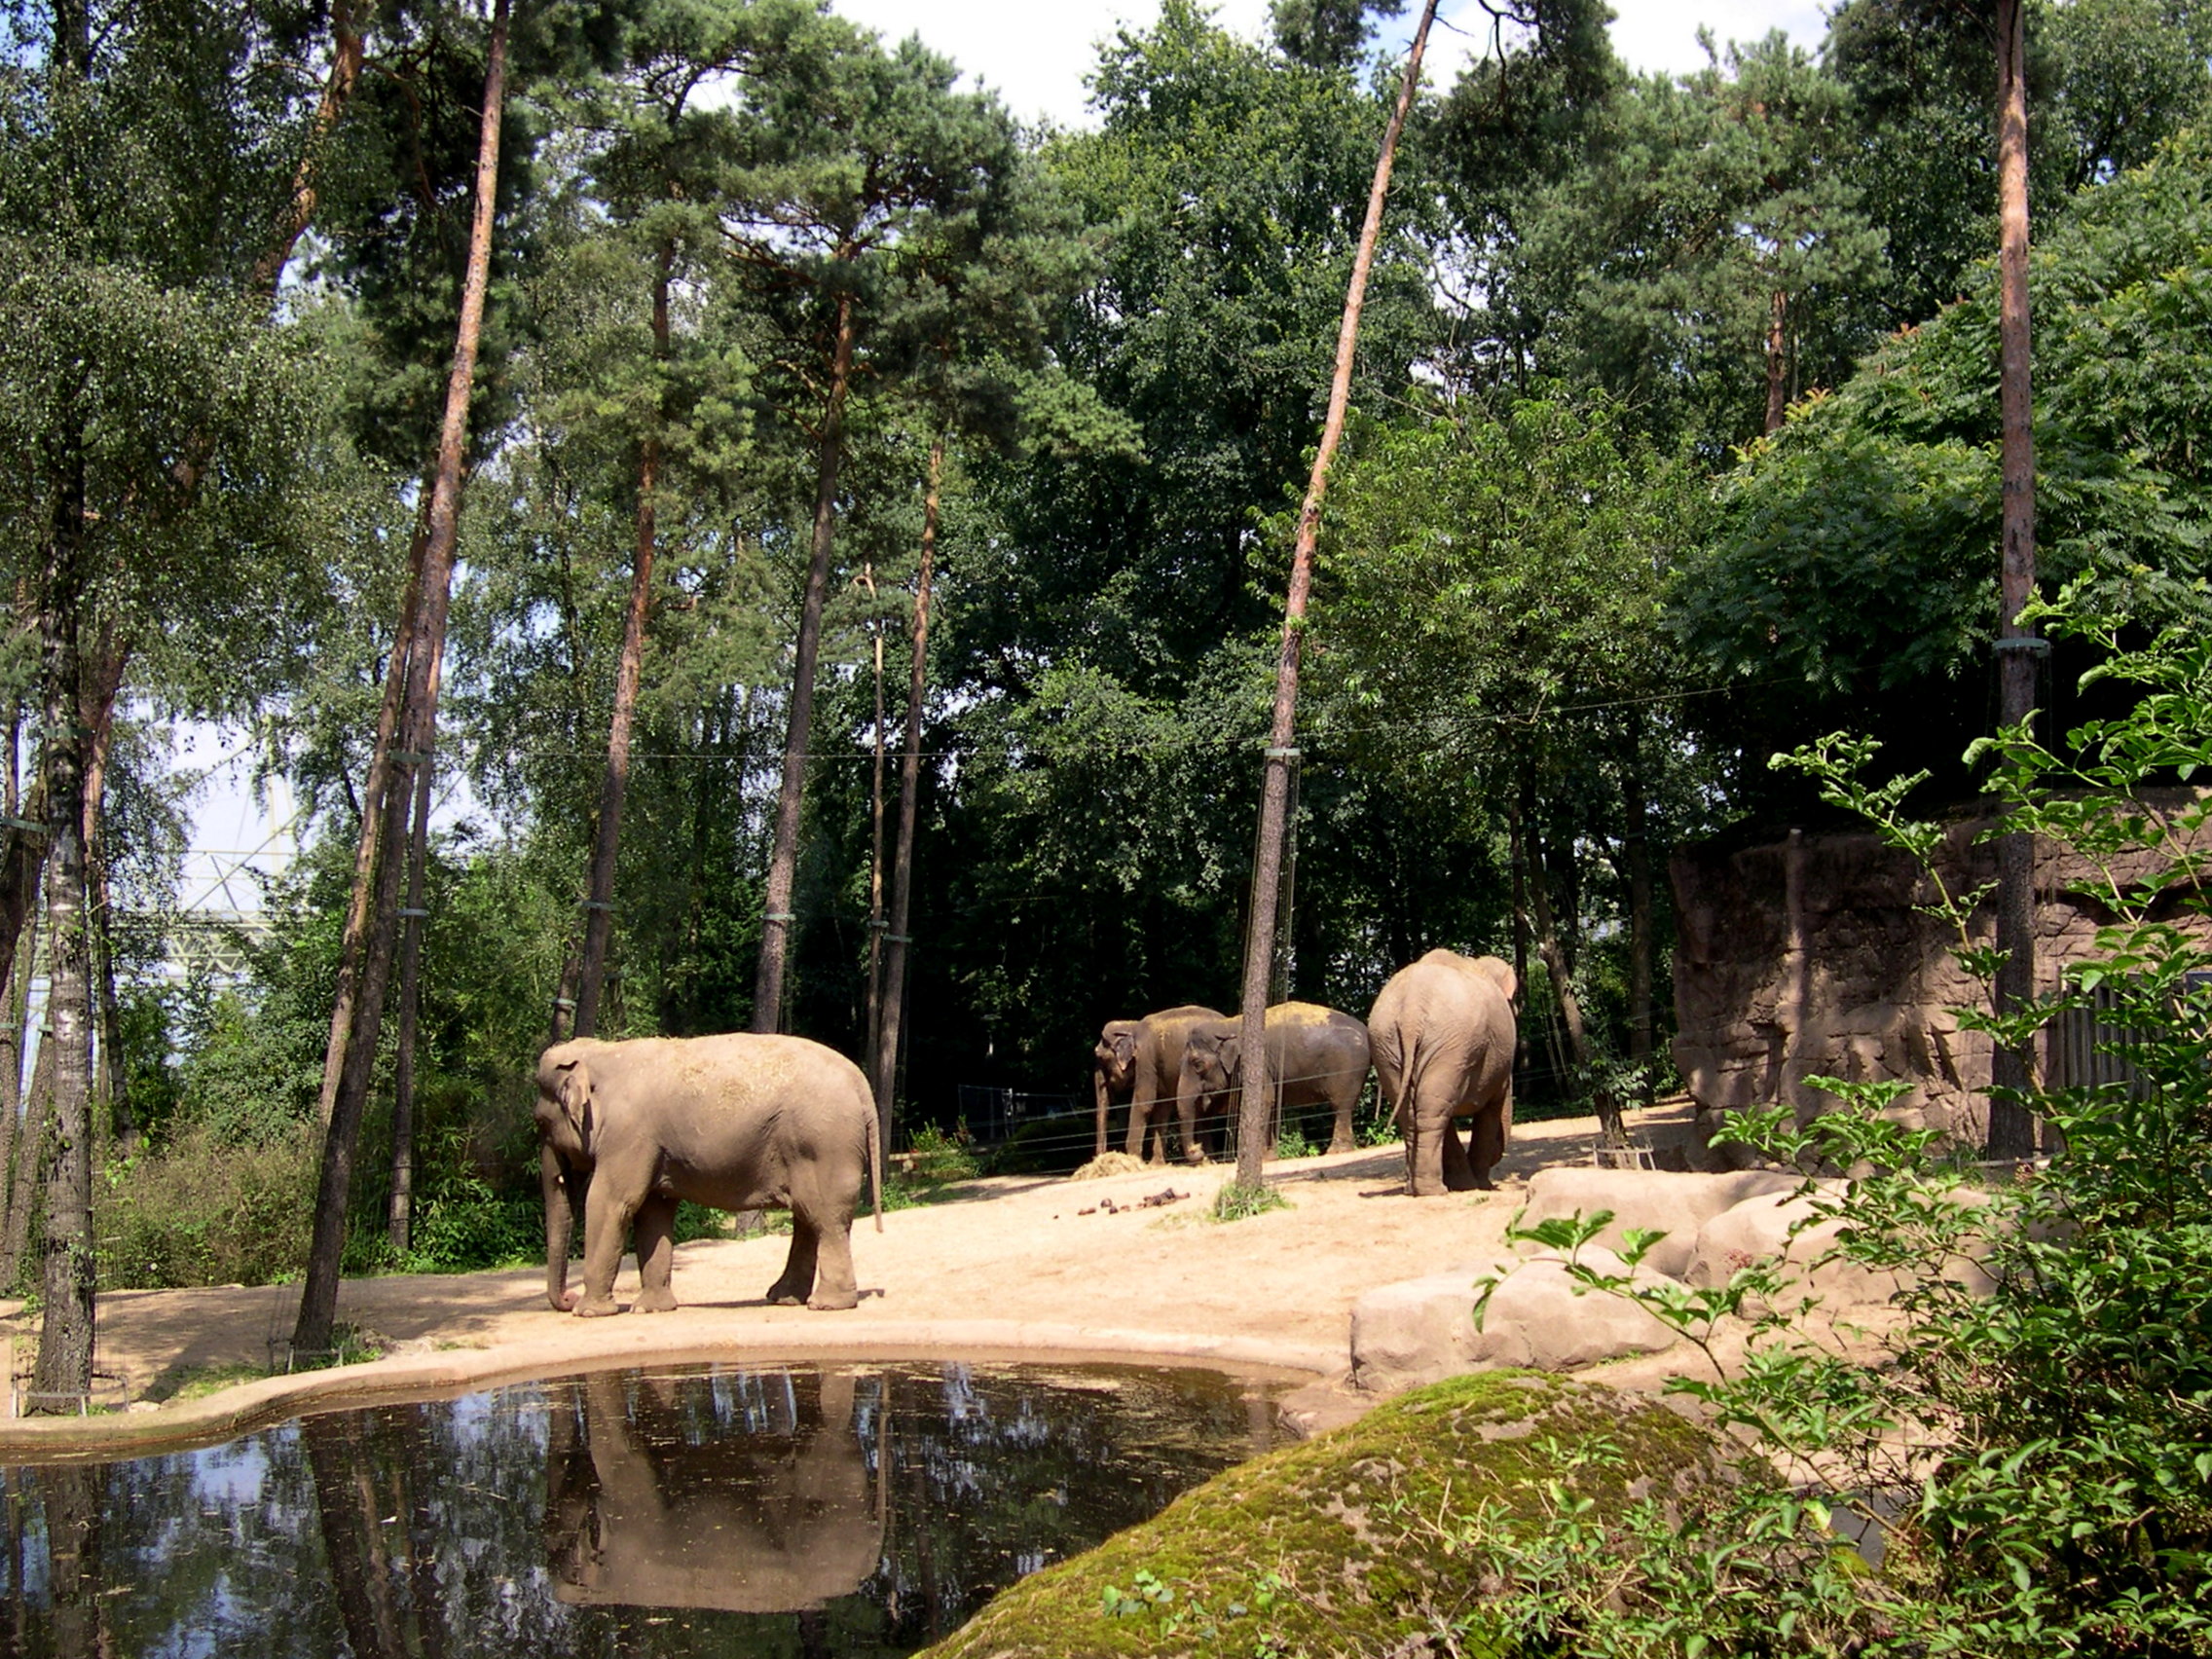 Elephants fonds ecran